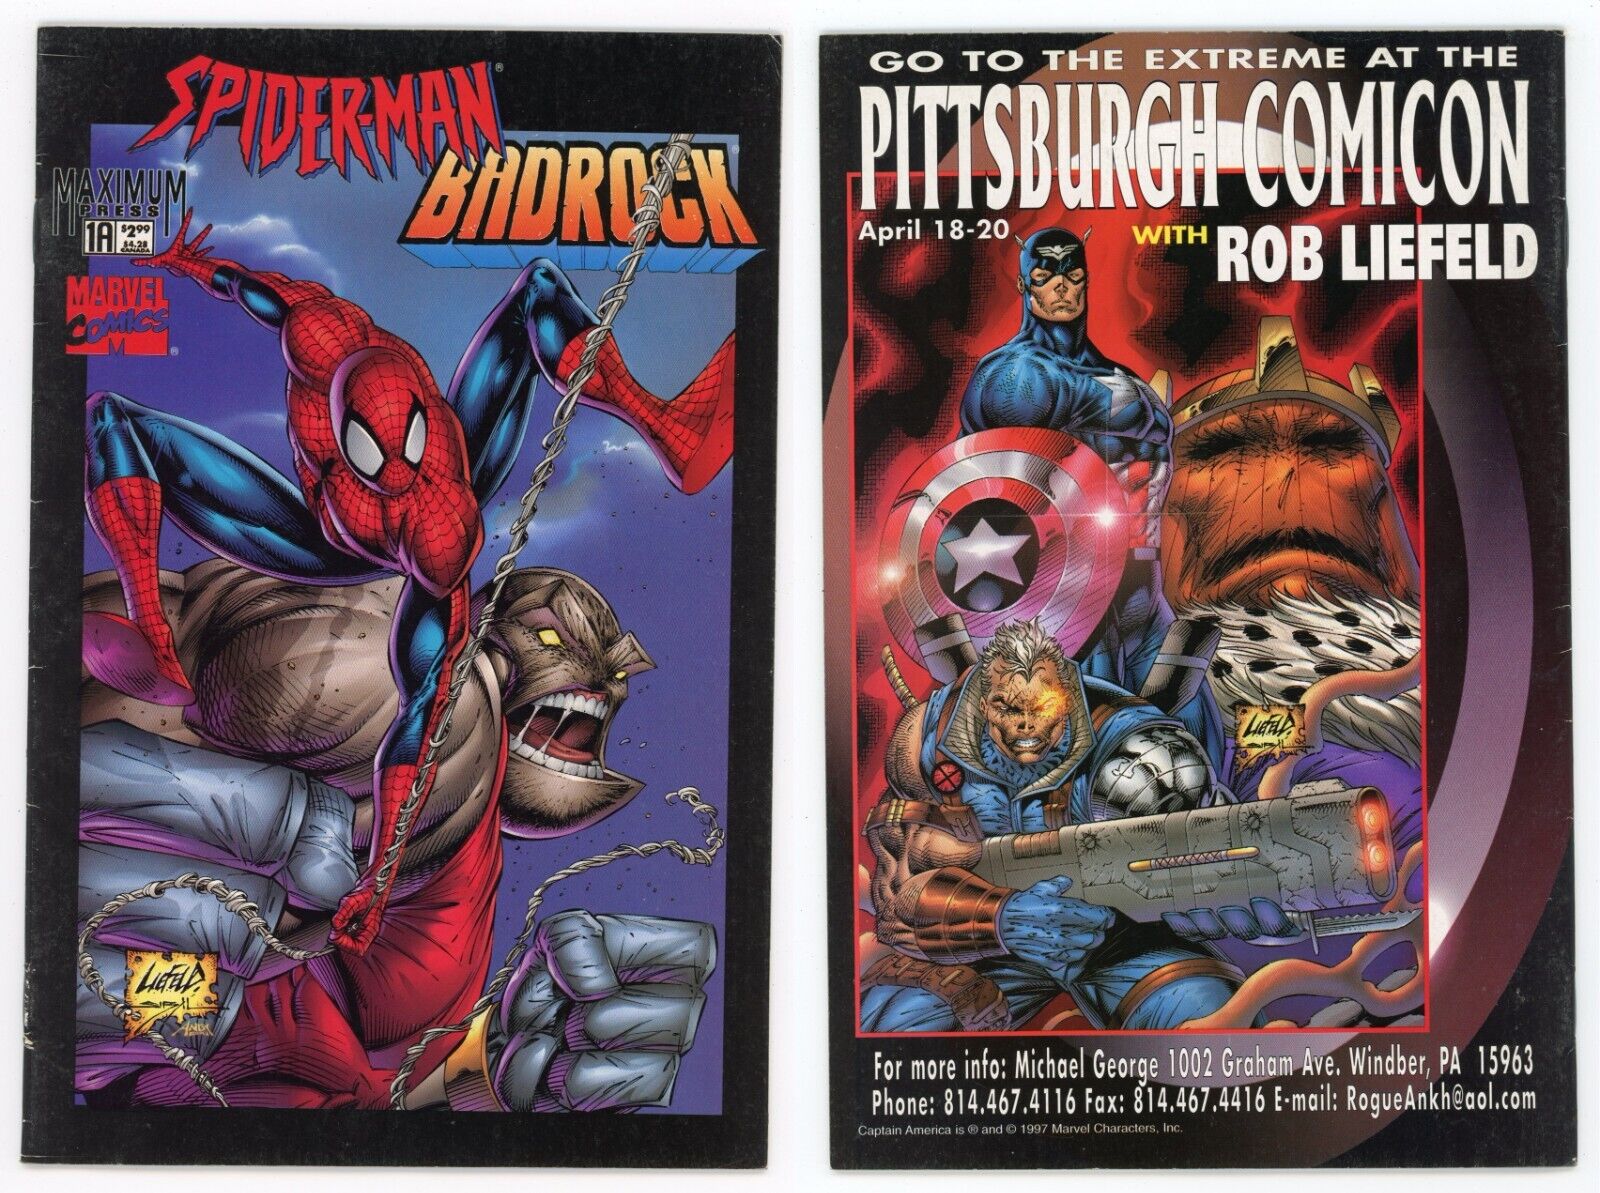 Spider-Man Badrock #1 (FN 6.0) Liefeld Variant Cover 1997 Marvel Maximum Press